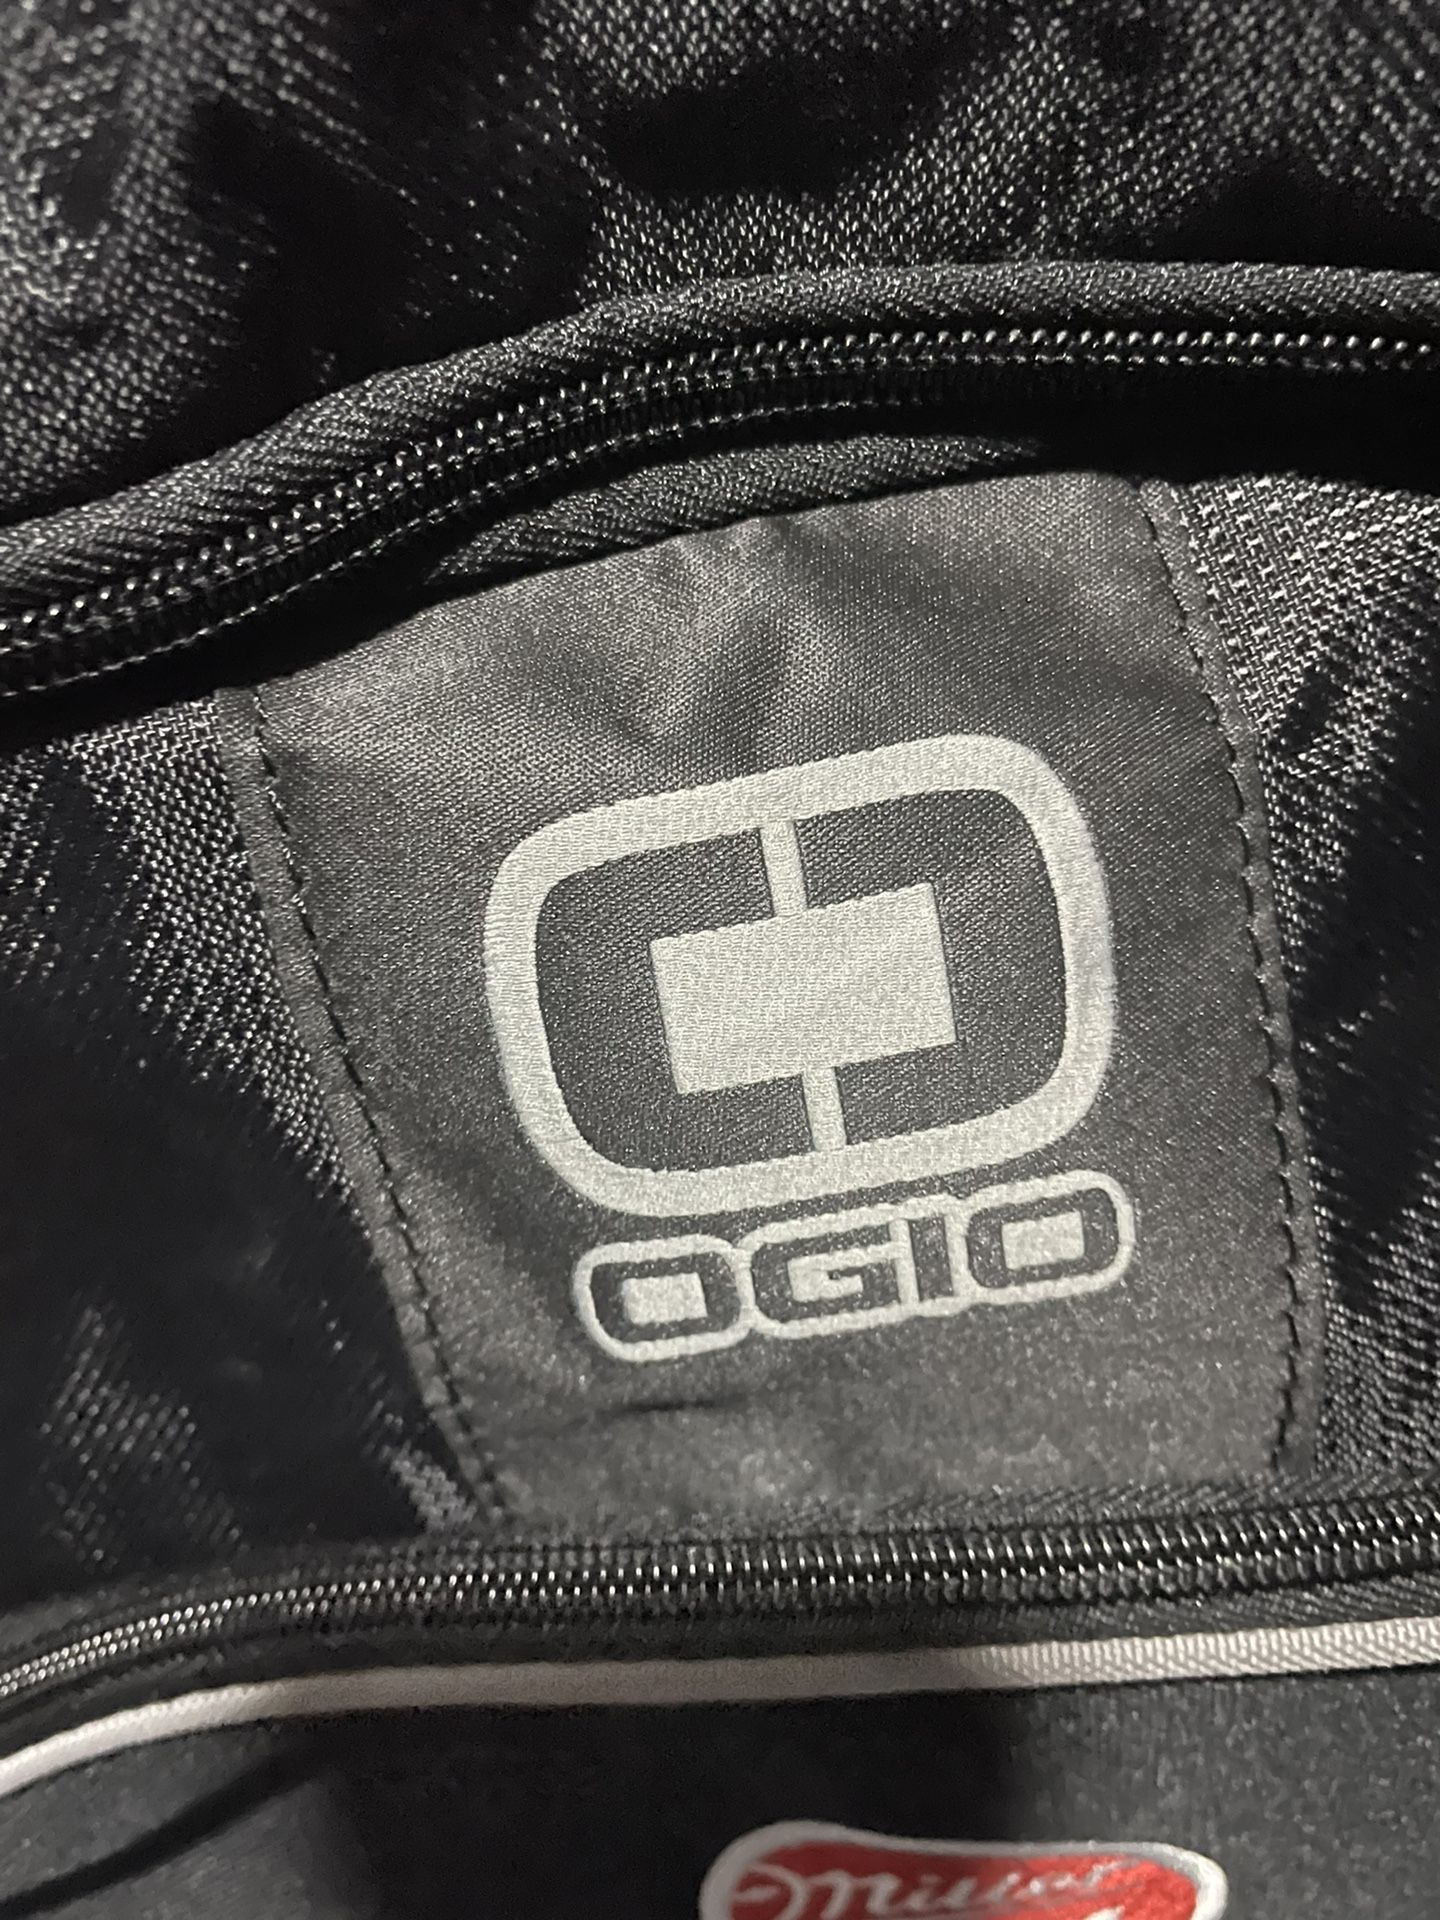 Ogio duffle bag with Miller logo  